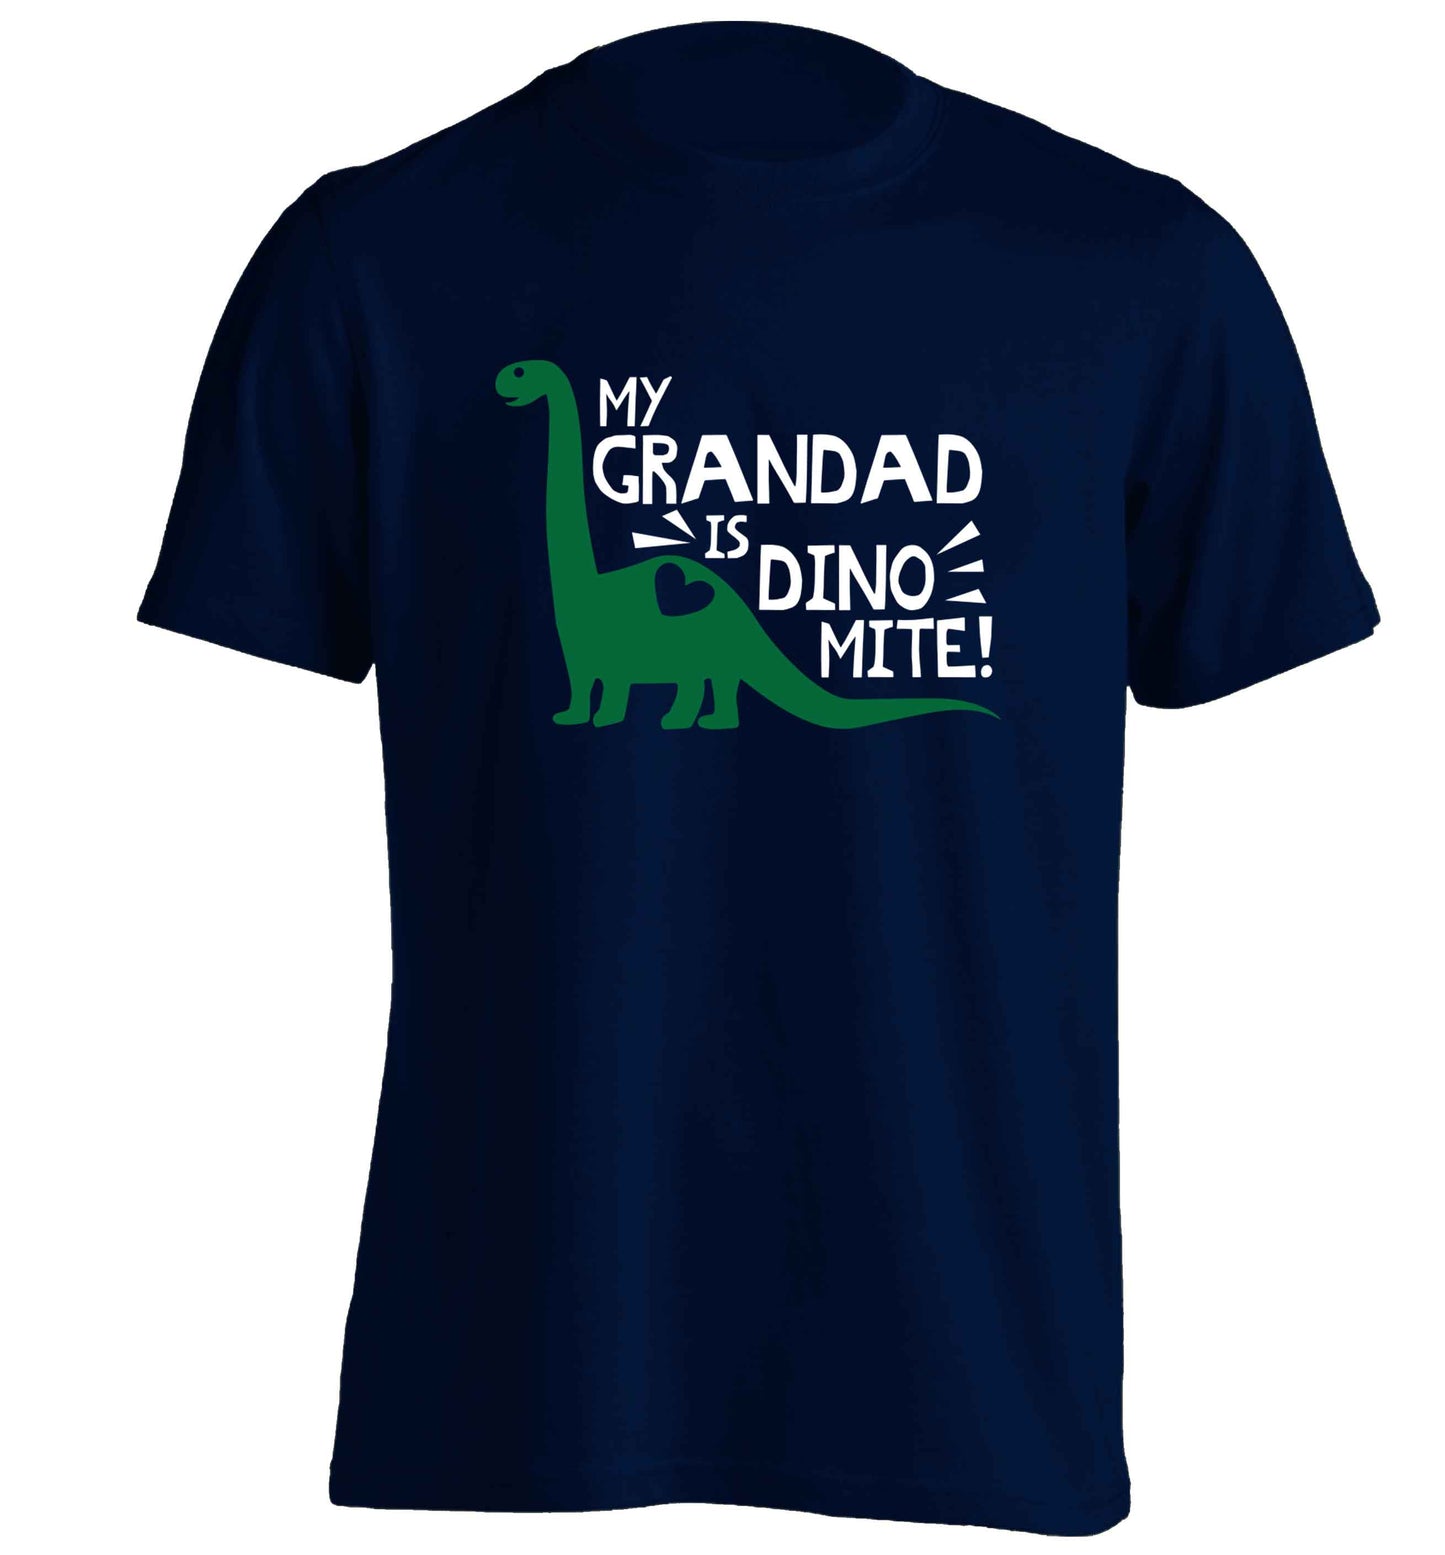 My grandad is dinomite! adults unisex navy Tshirt 2XL